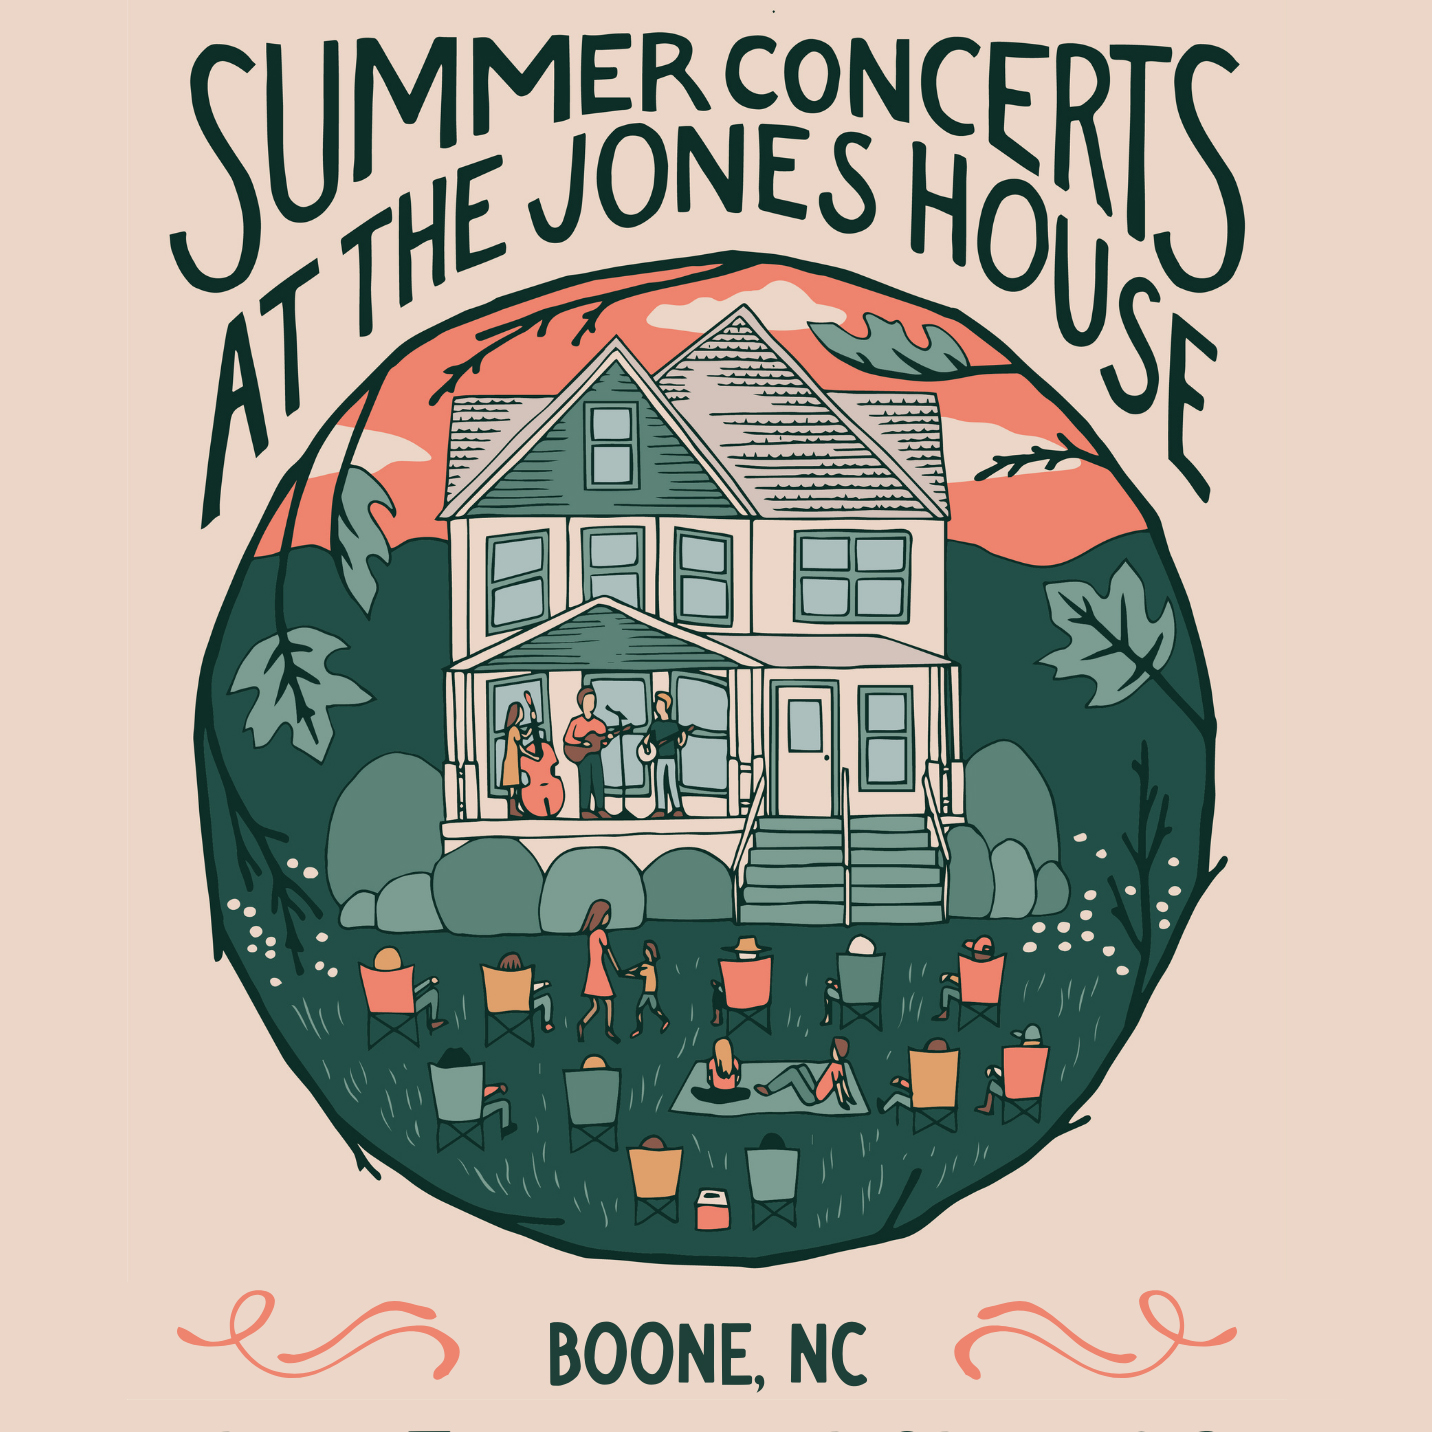 Jones House Summer Concerts Boone NC.jpg